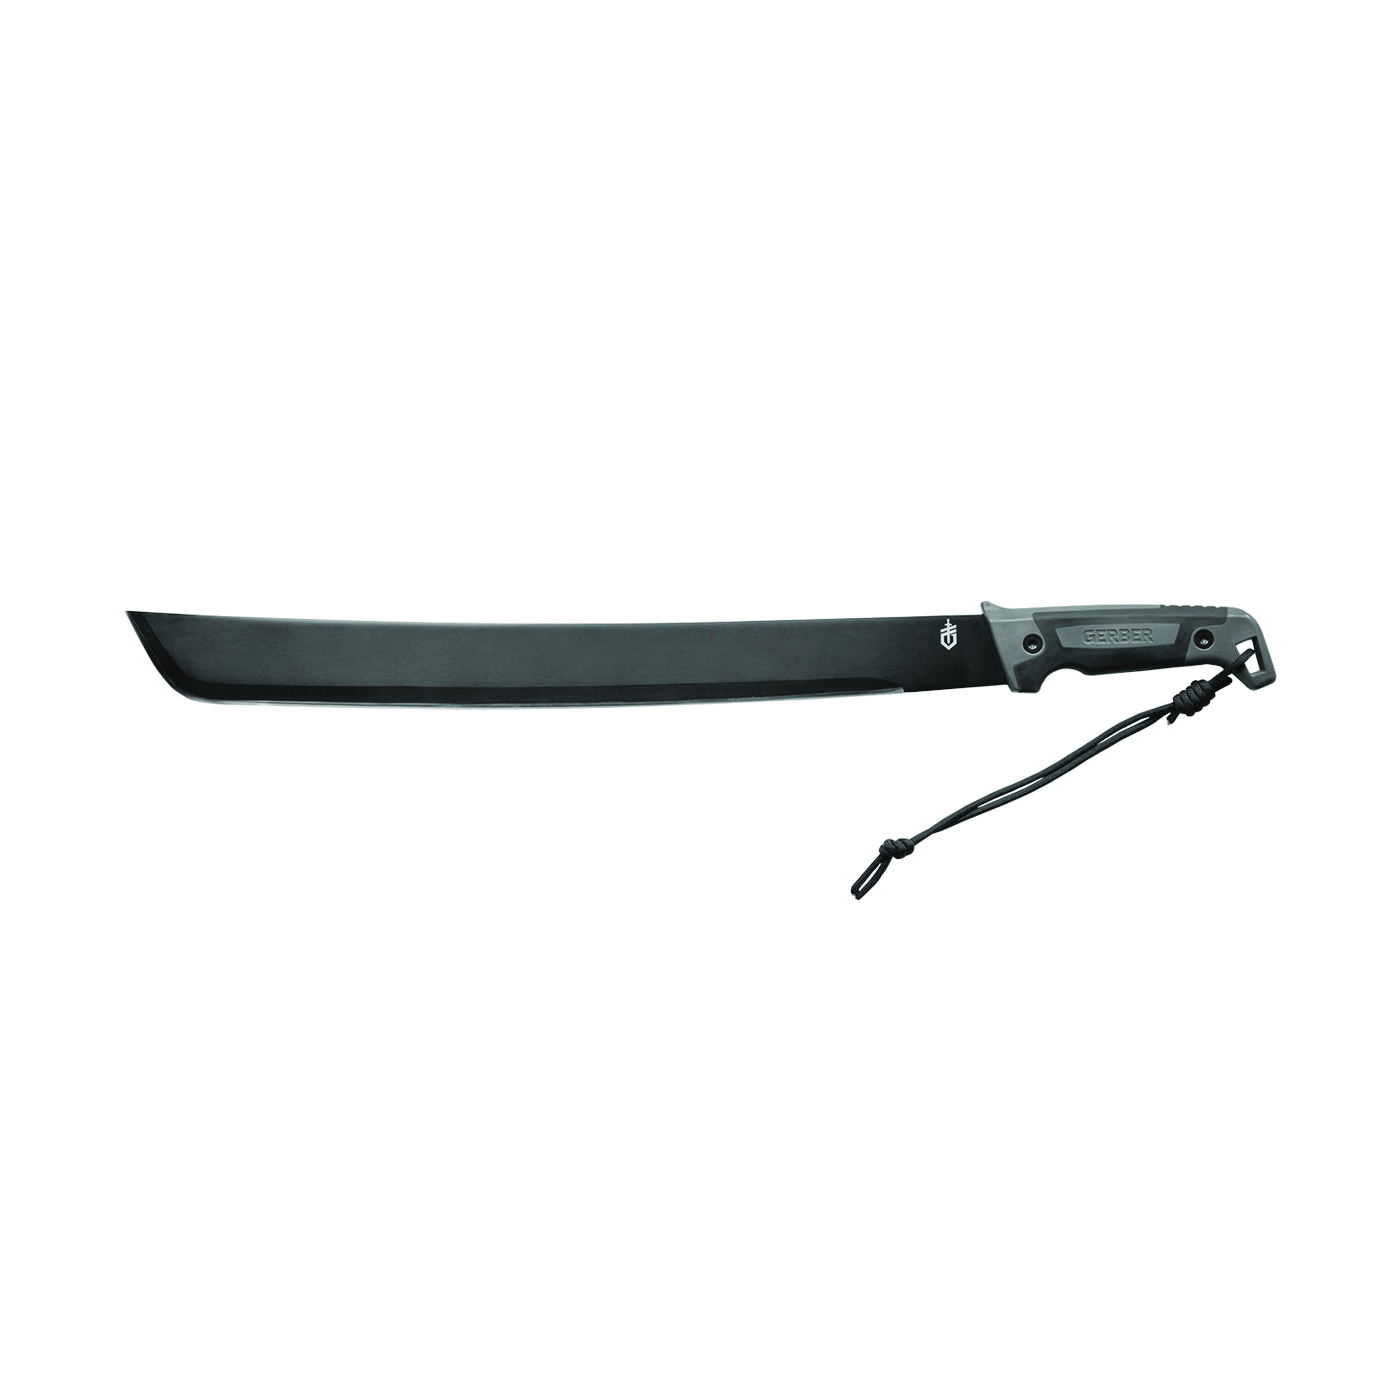 31-002848 Bush Machete, Steel Blade, Nylon Handle, Grip Handle, Black Handle, 24 in L